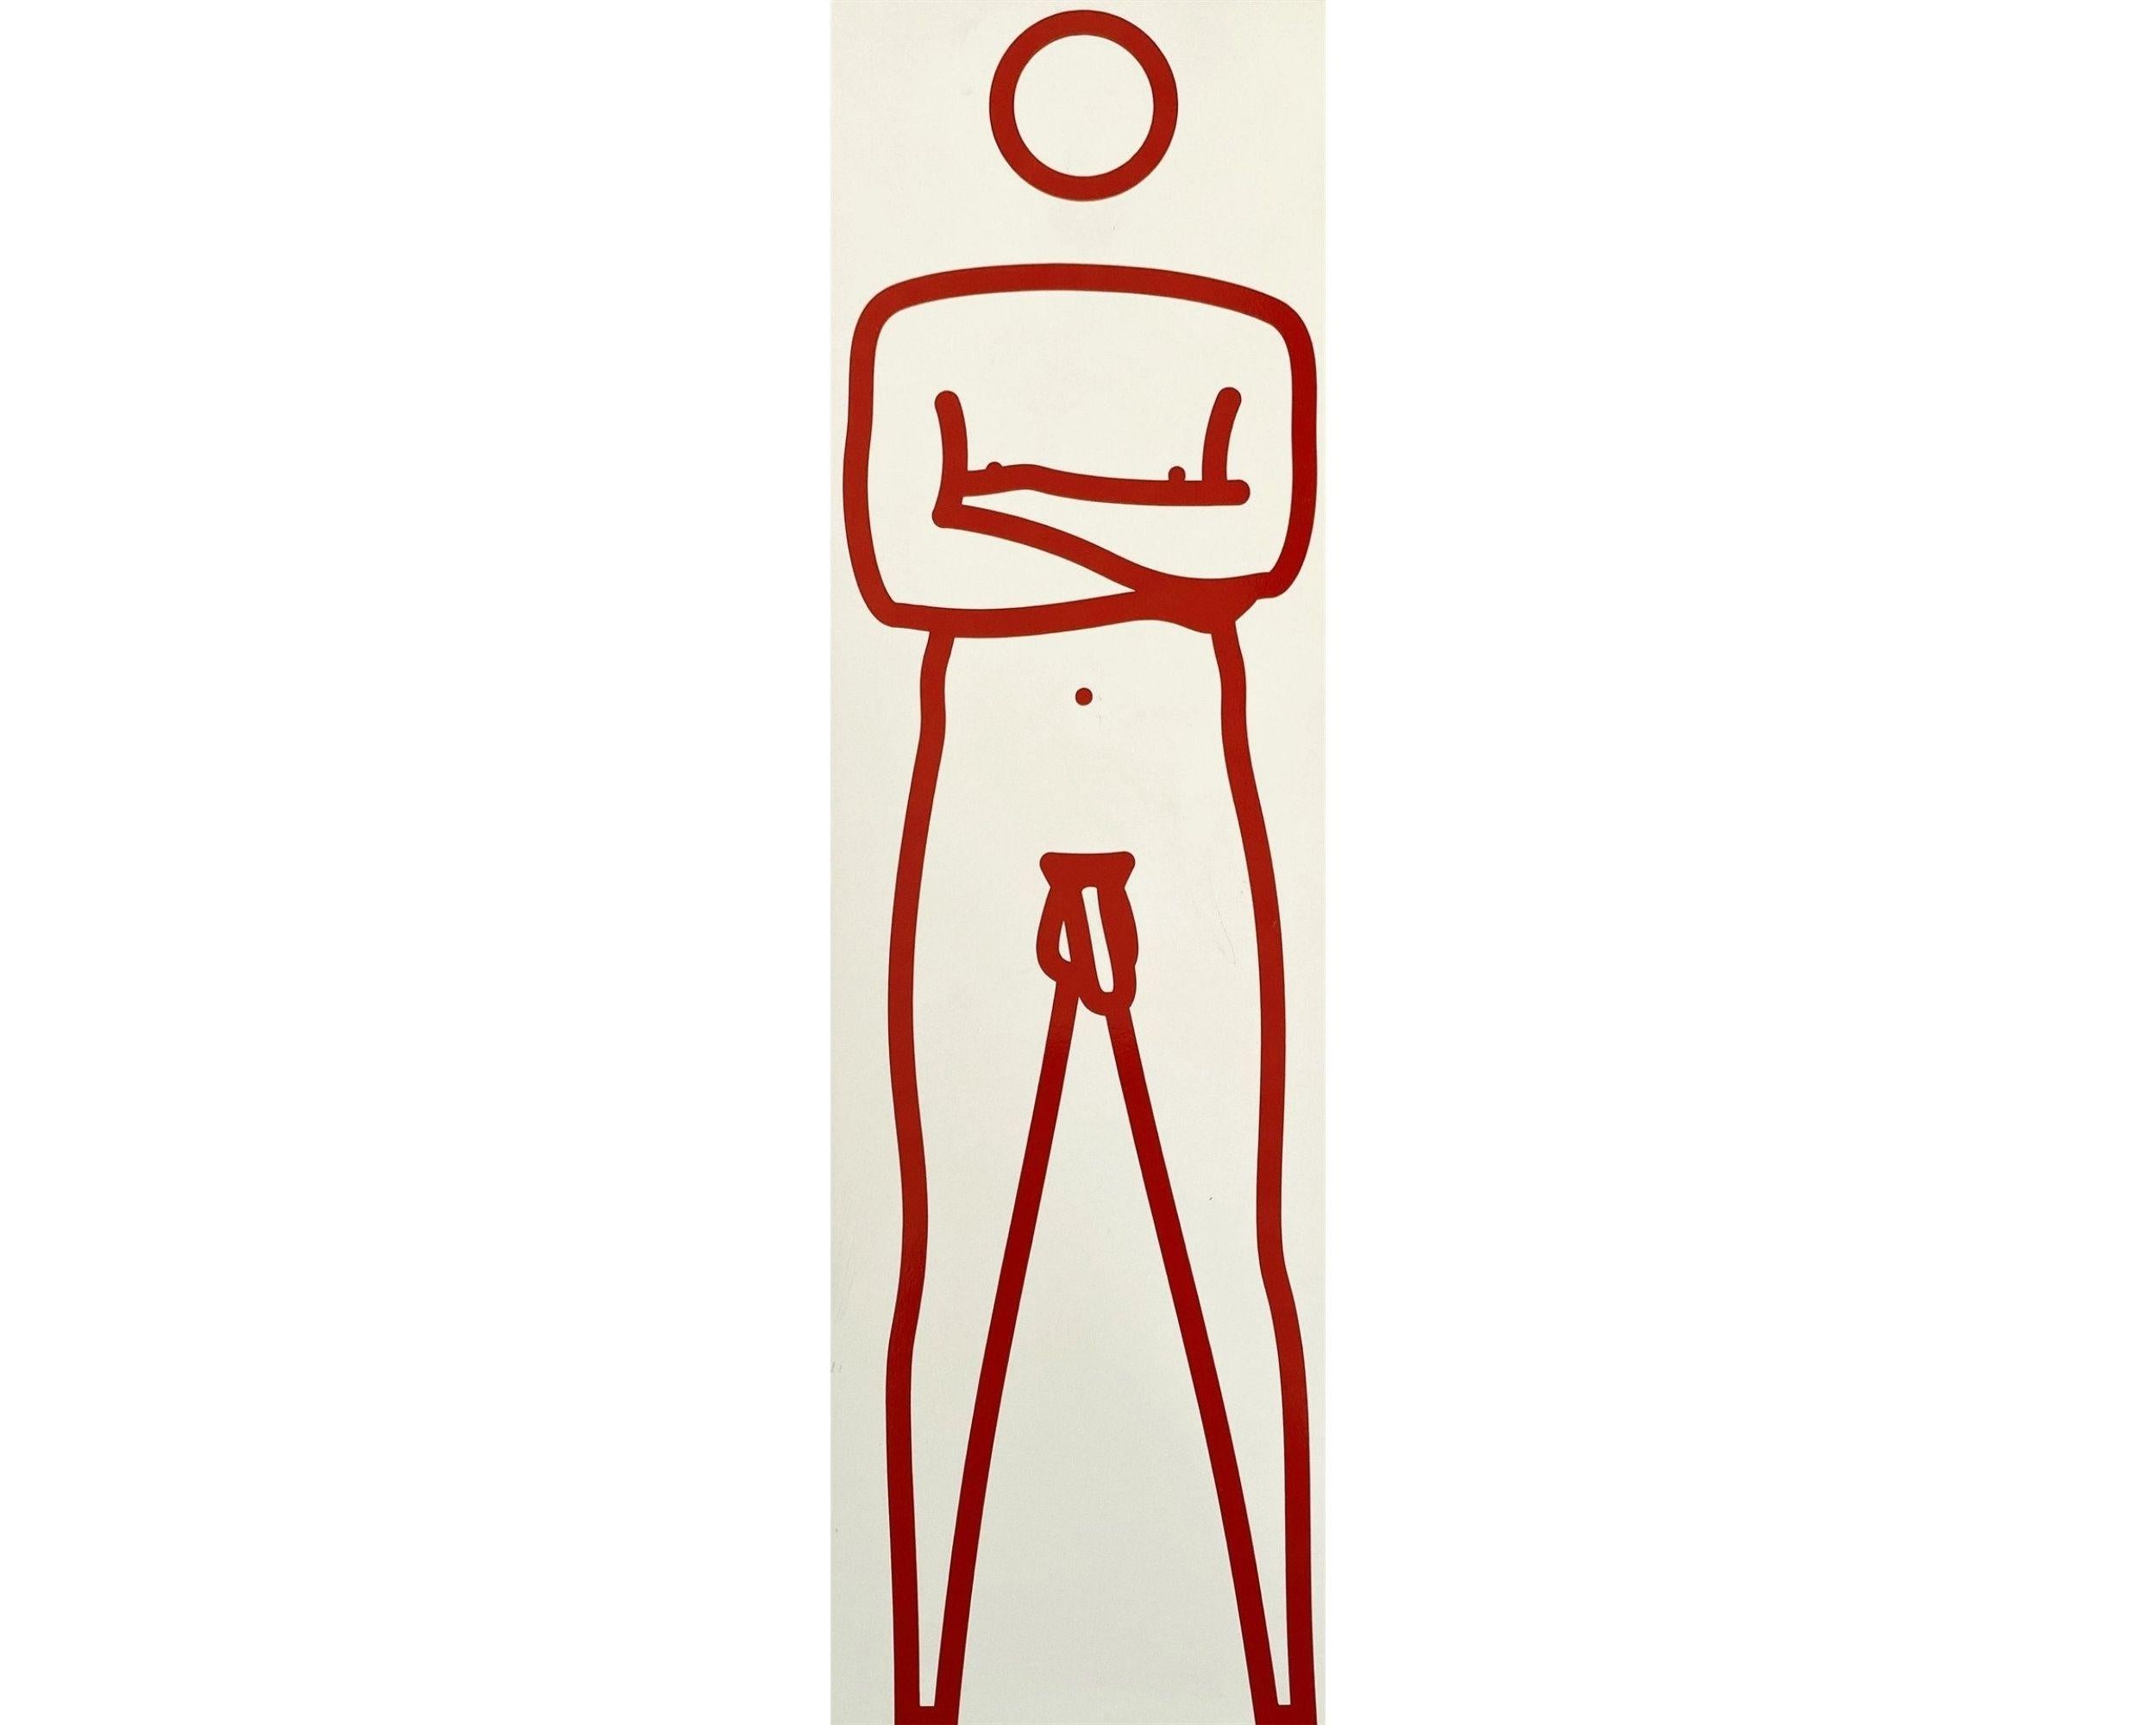 Julian nackte Arme gekreuzt – Skulptur, mehrfach, einzigartig, Pop Art von Julian Opie